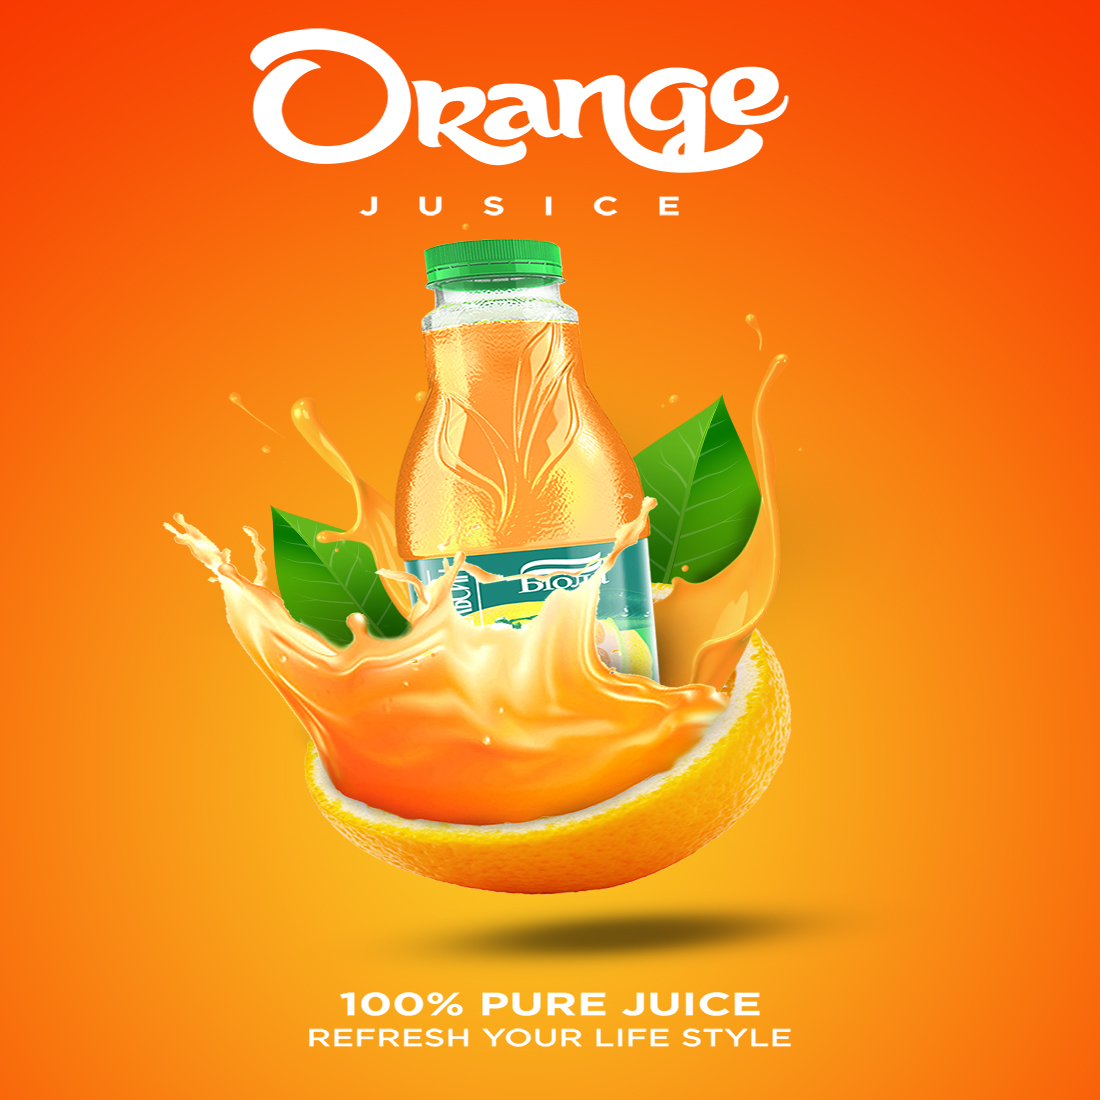 Orange Juice Poster Design Template preview image.